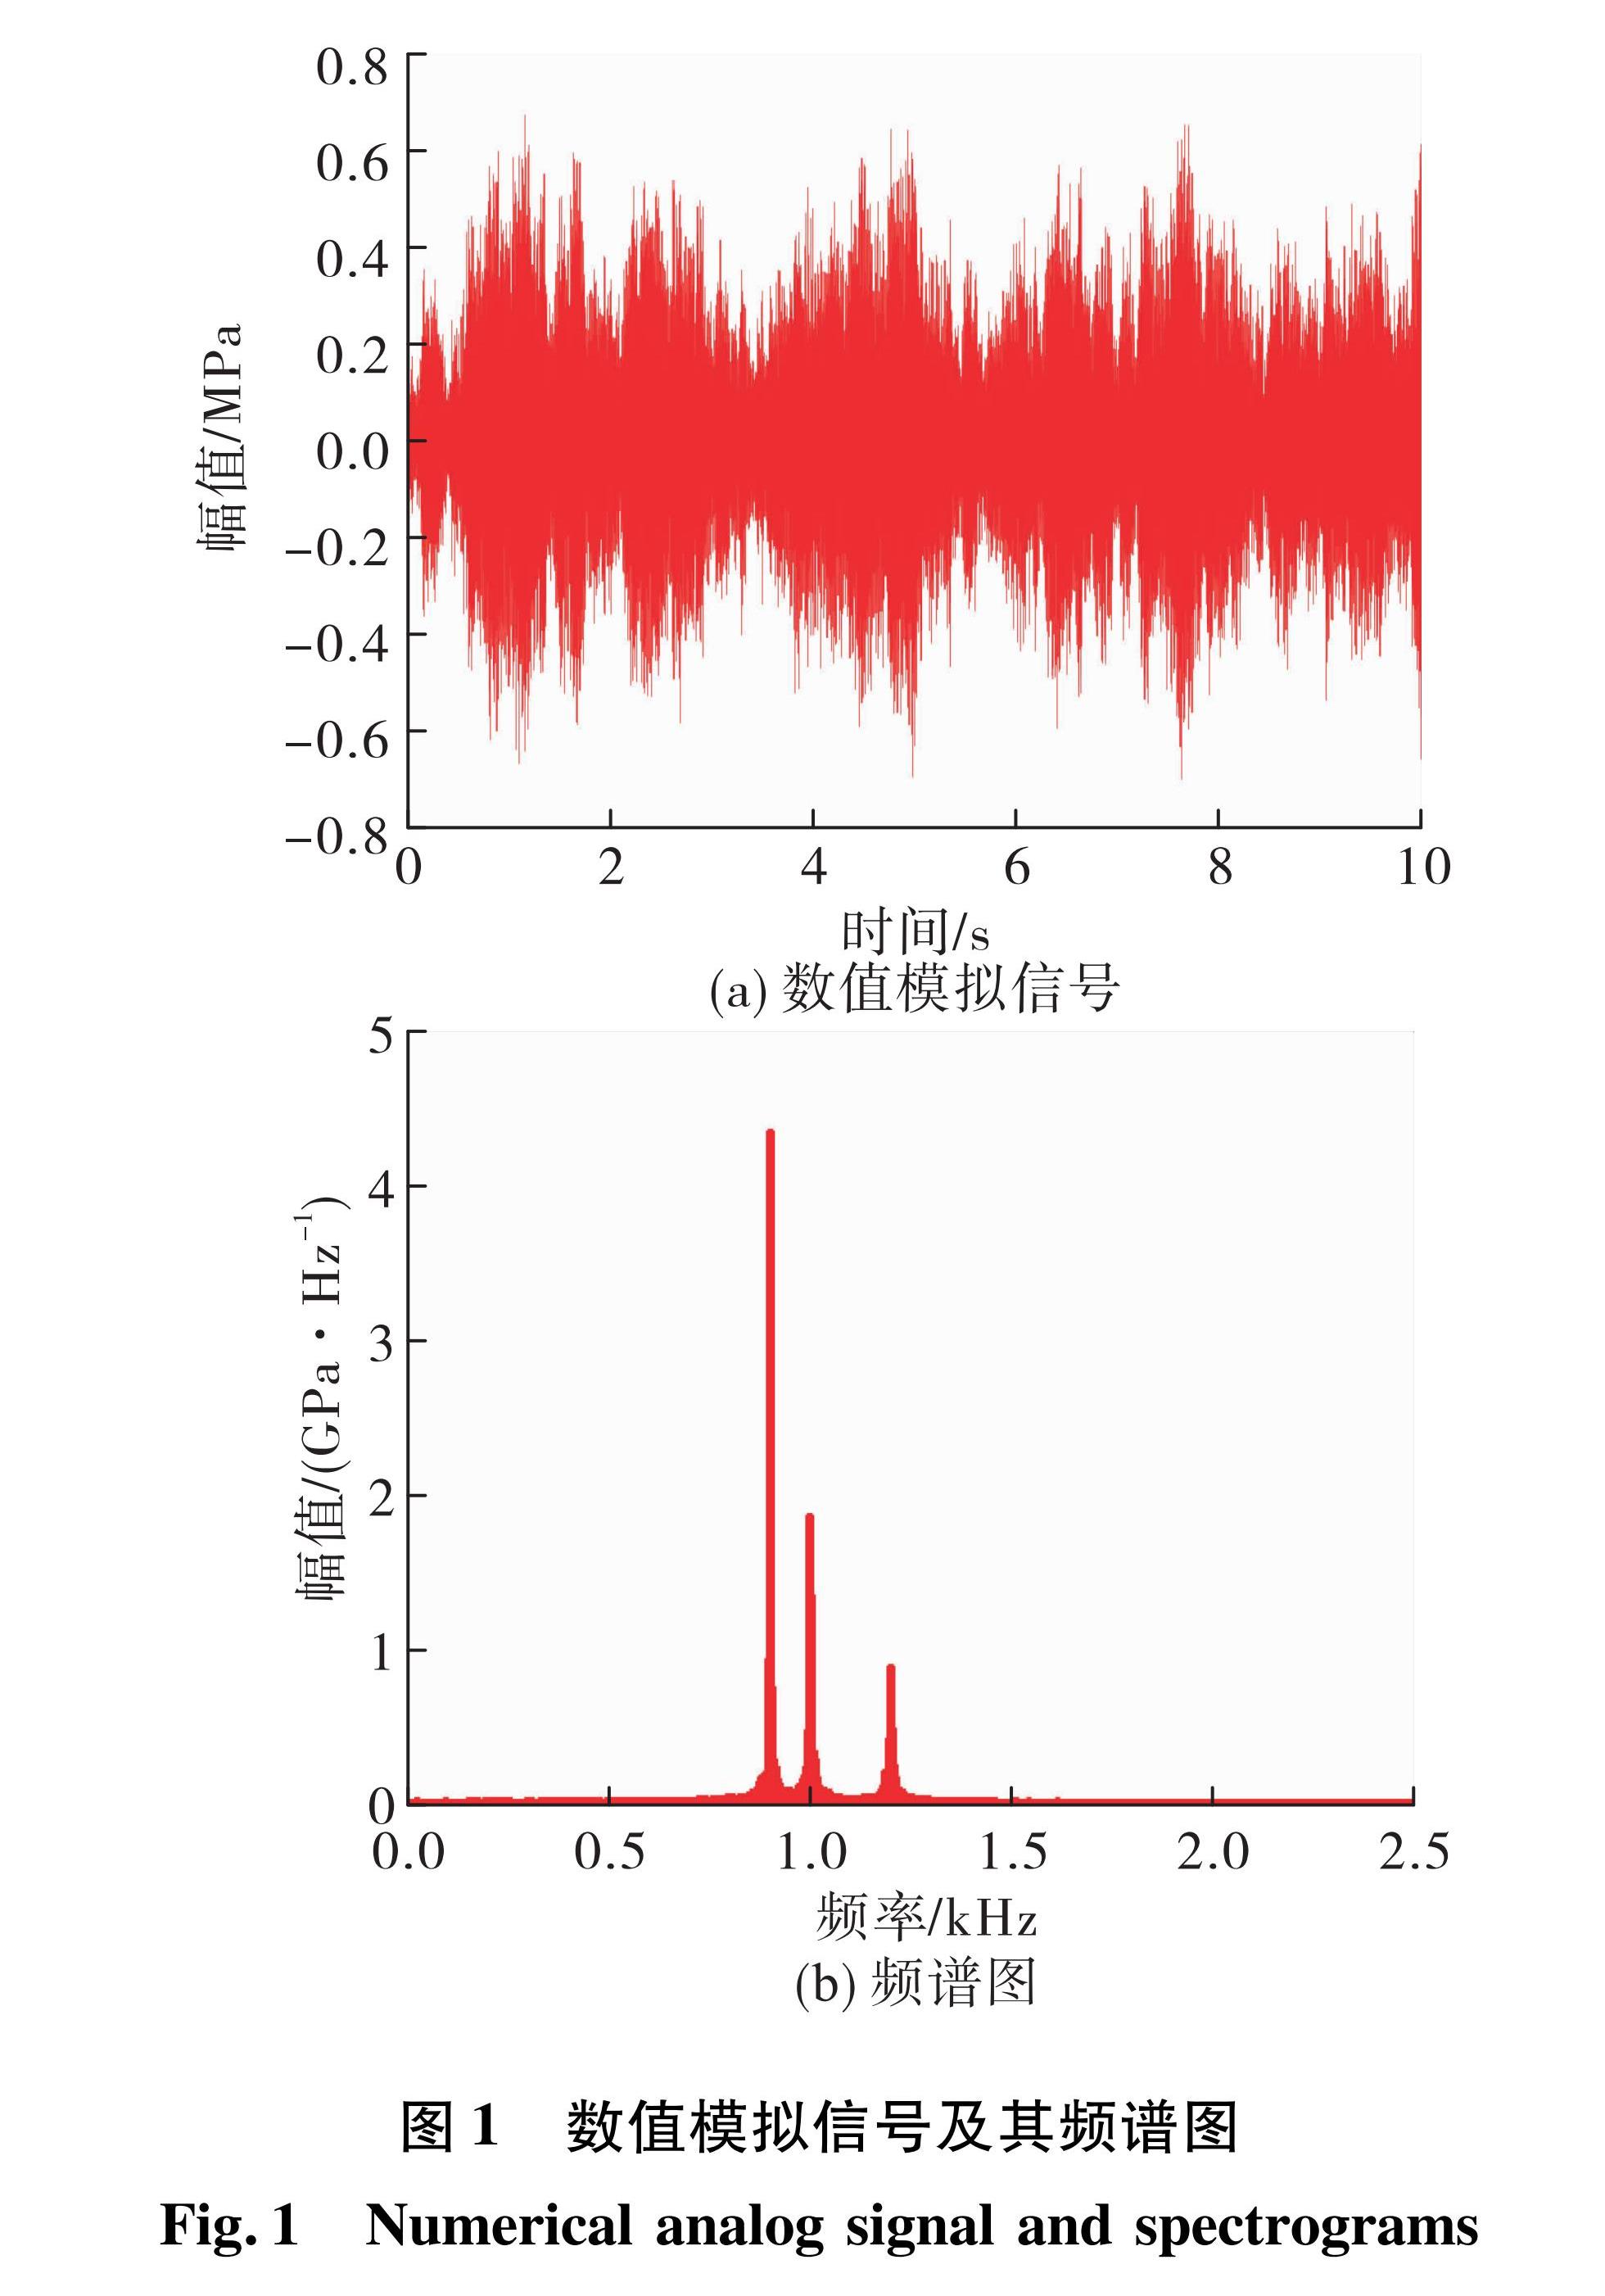 图1 数值模拟信号及其频谱图<br/>Fig.1 Numerical analog signal and spectrograms